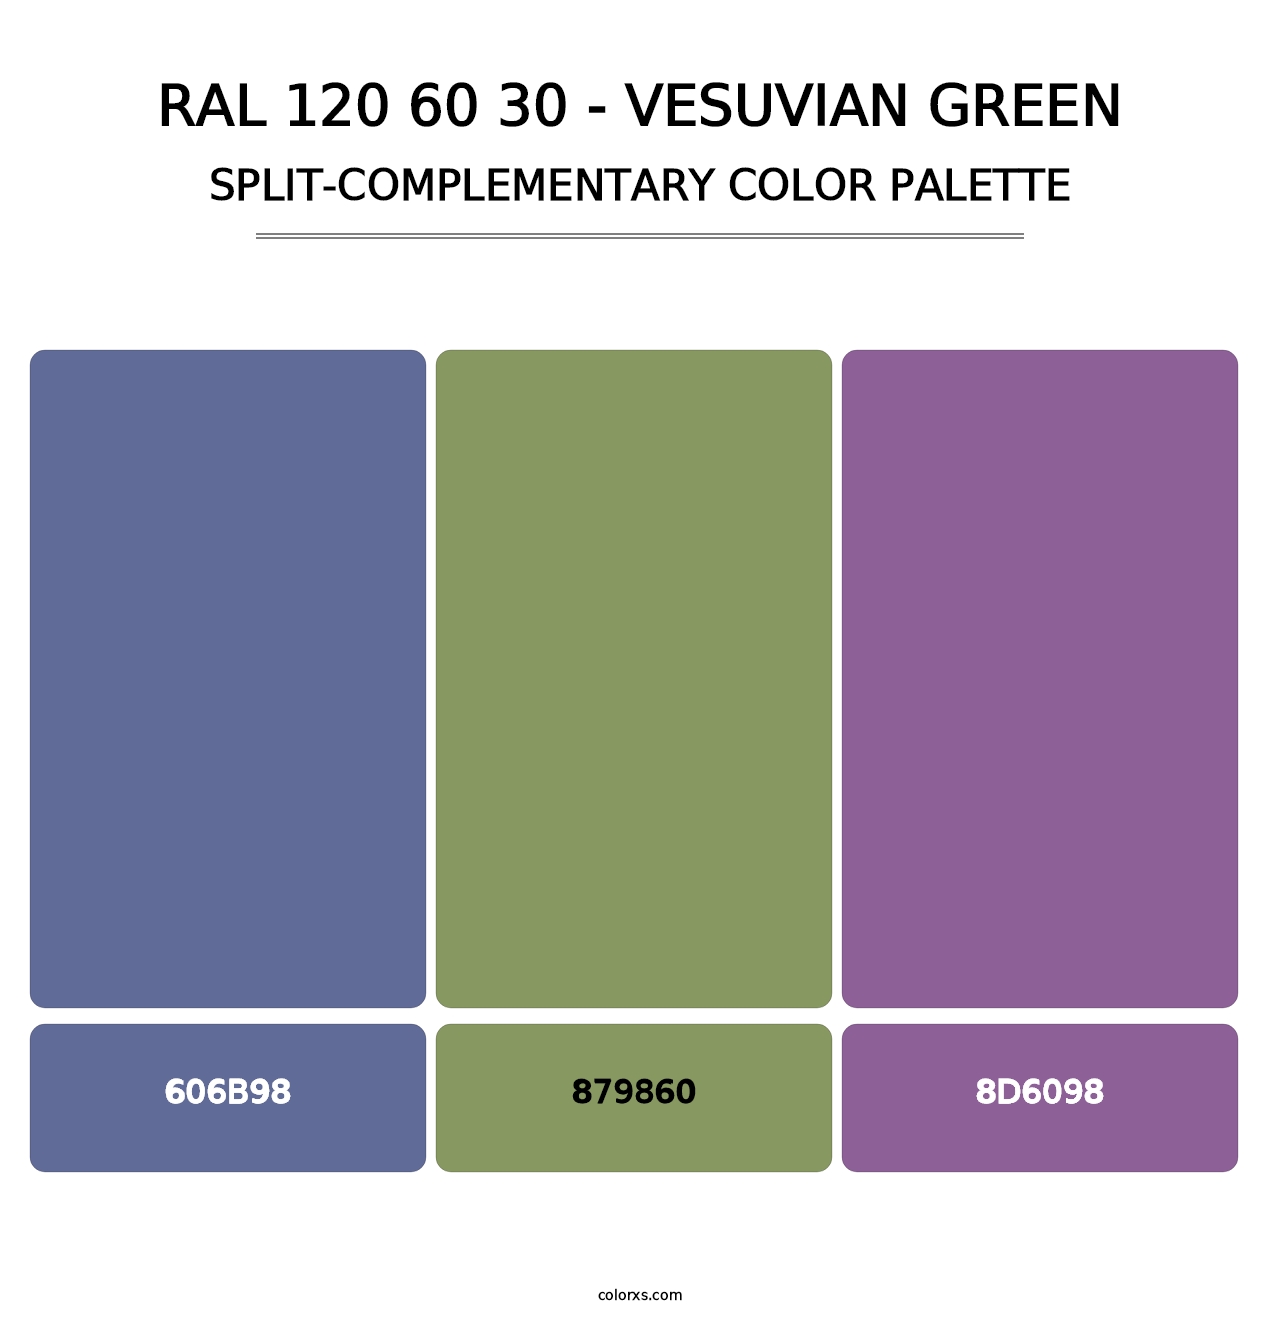 RAL 120 60 30 - Vesuvian Green - Split-Complementary Color Palette